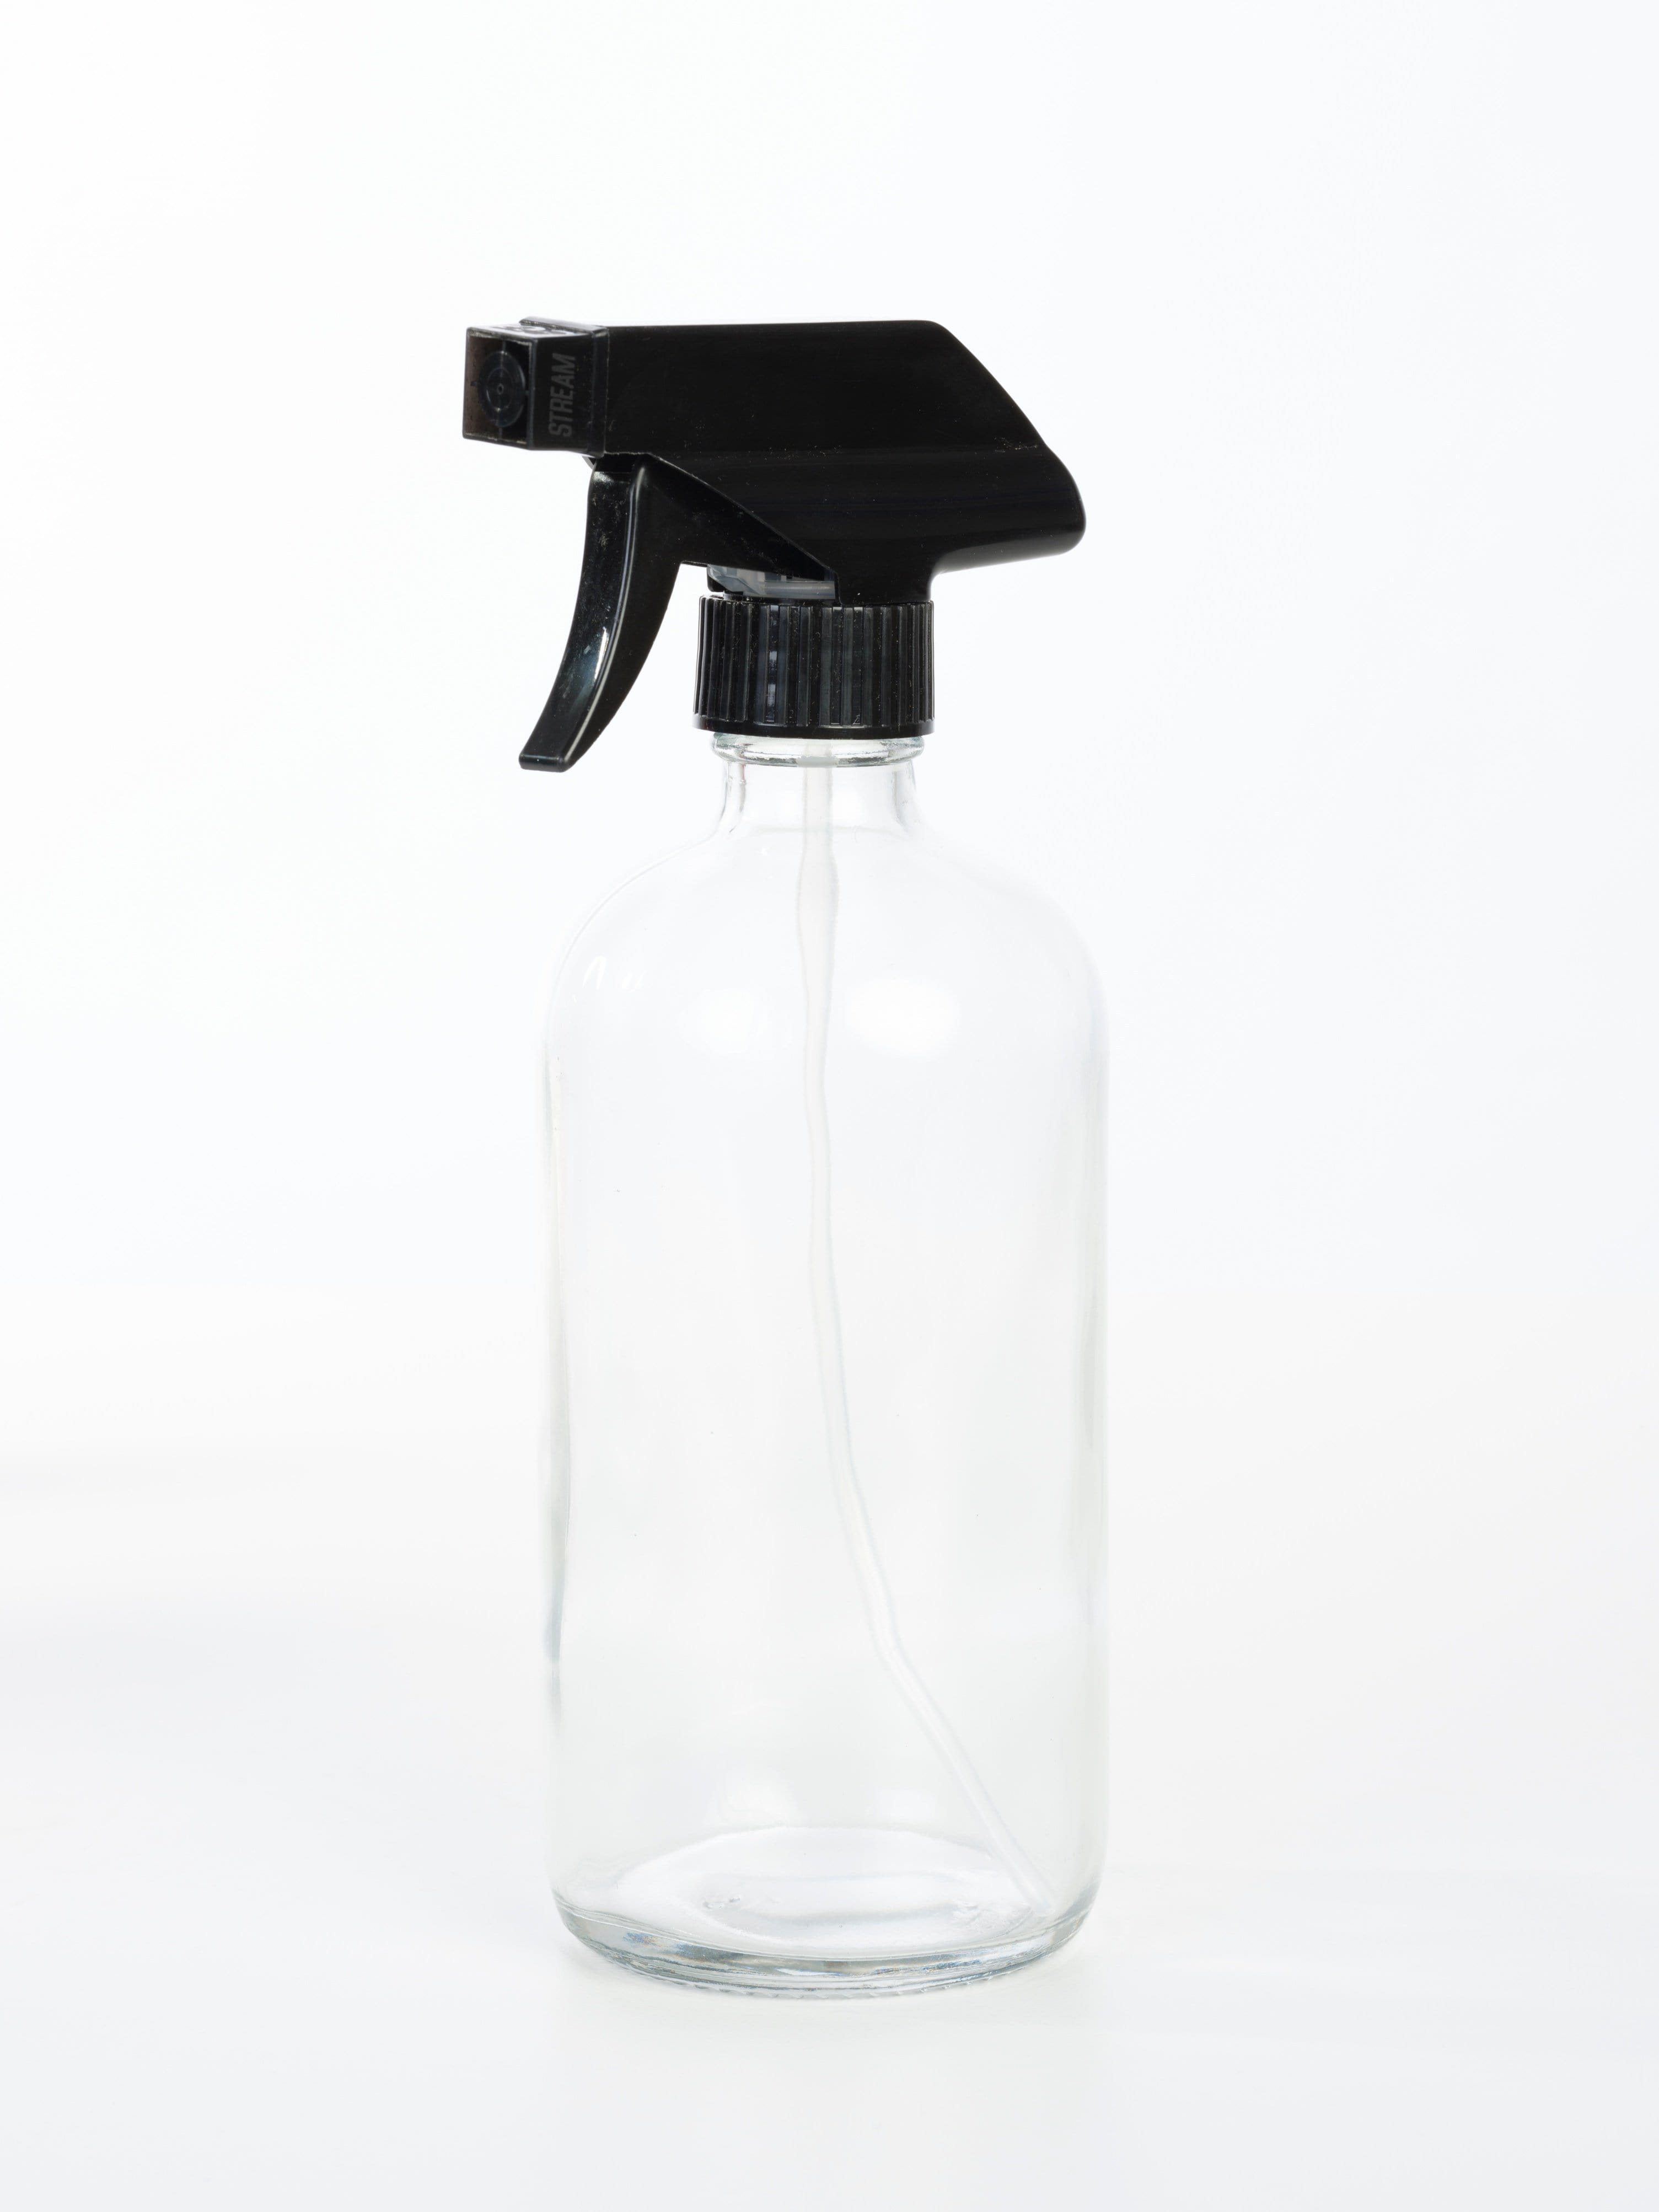 3 Pcs Plastic Trigger Spray Bottle 16 OZ Heavy Duty Chemical Resistant  Sprayer